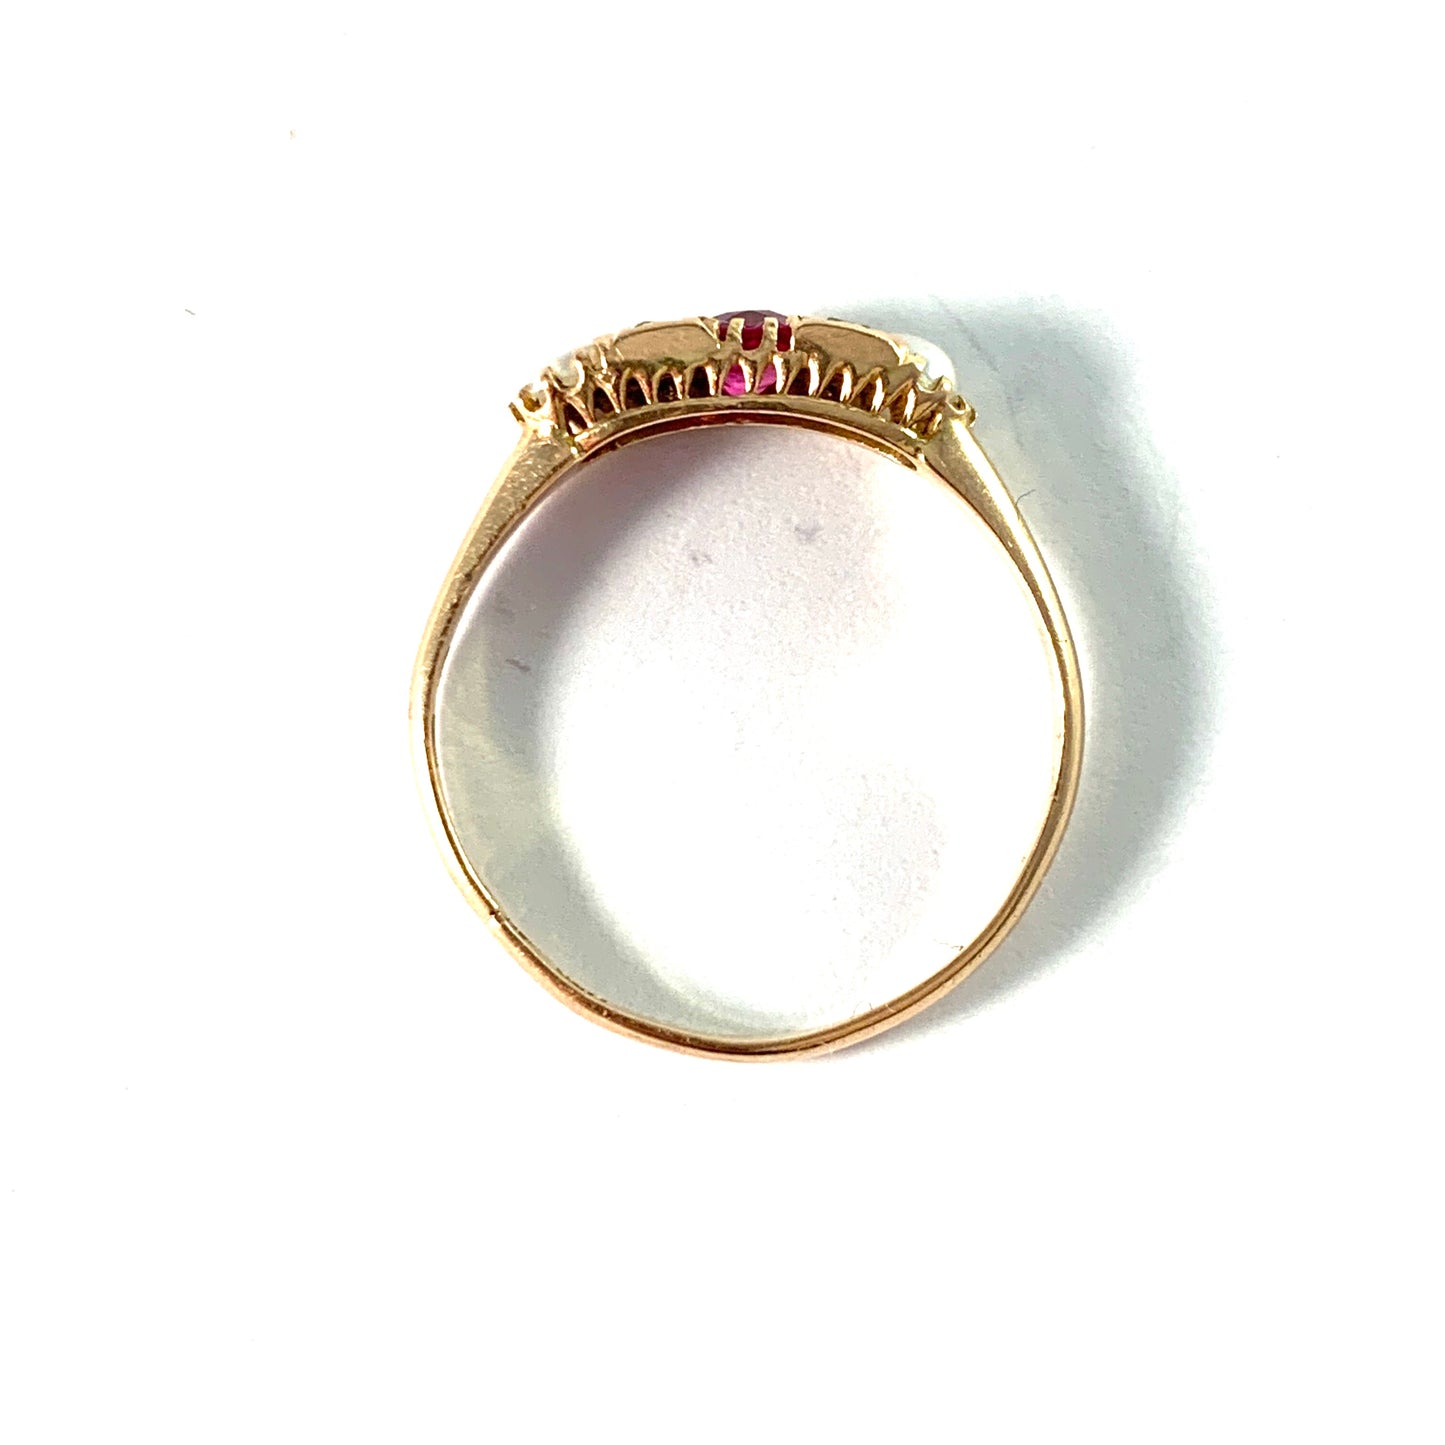 Bernhard Herz, Sweden 1907. Antique 18k Gold Diamond, Pink Sapphire and Pearl Ring.